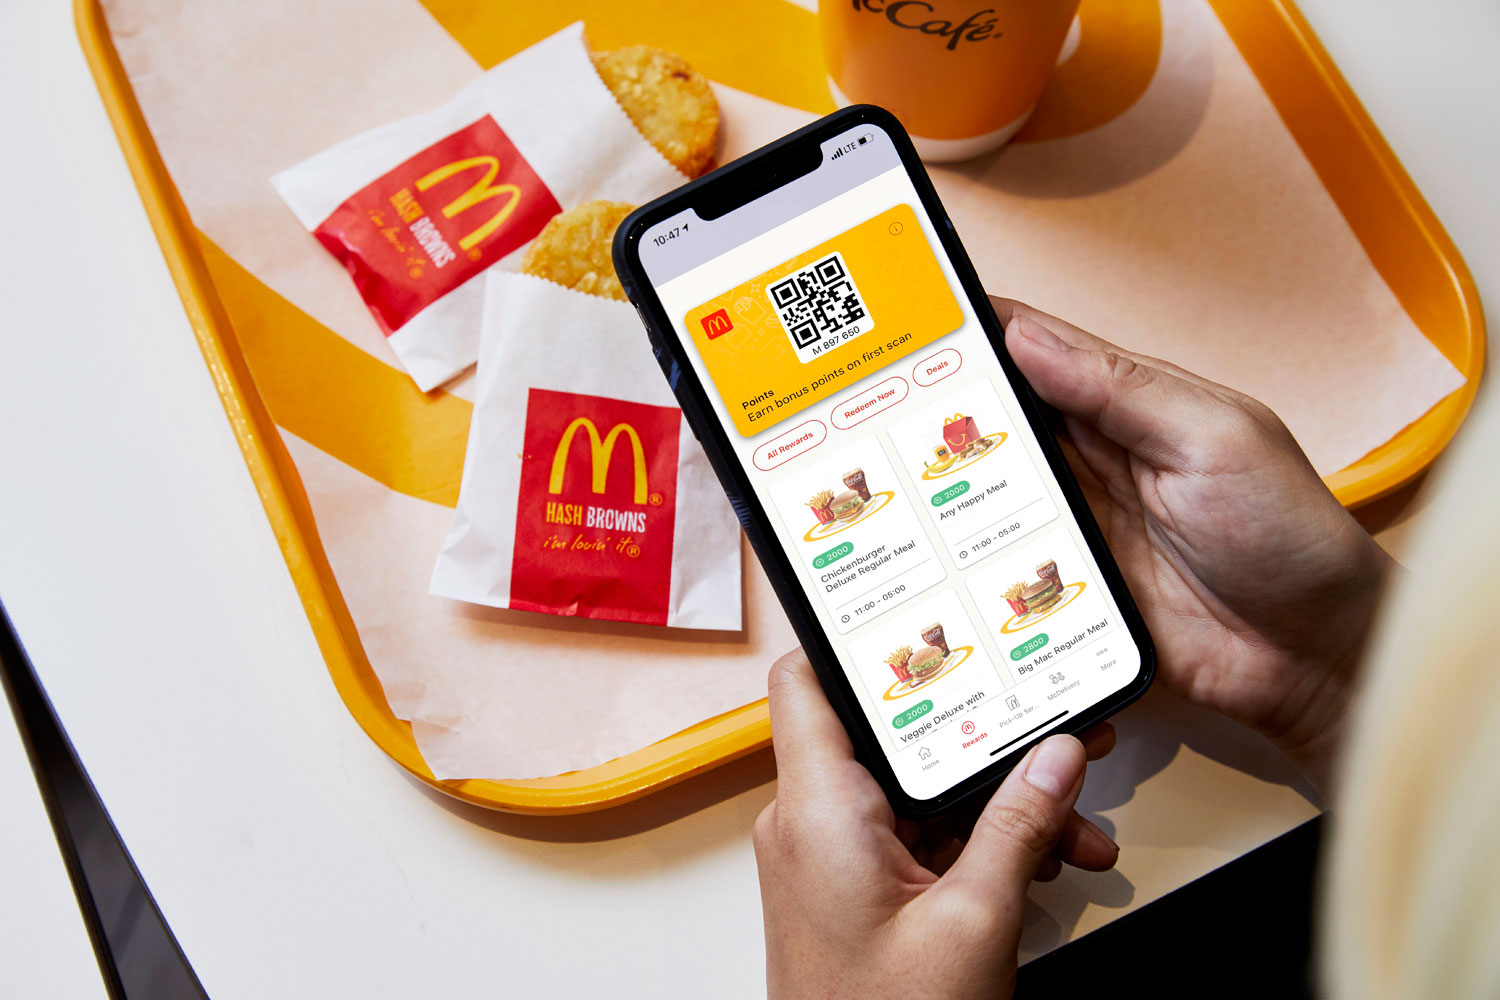 McDonald's UAE has launched the new McDonald's Rewards Program